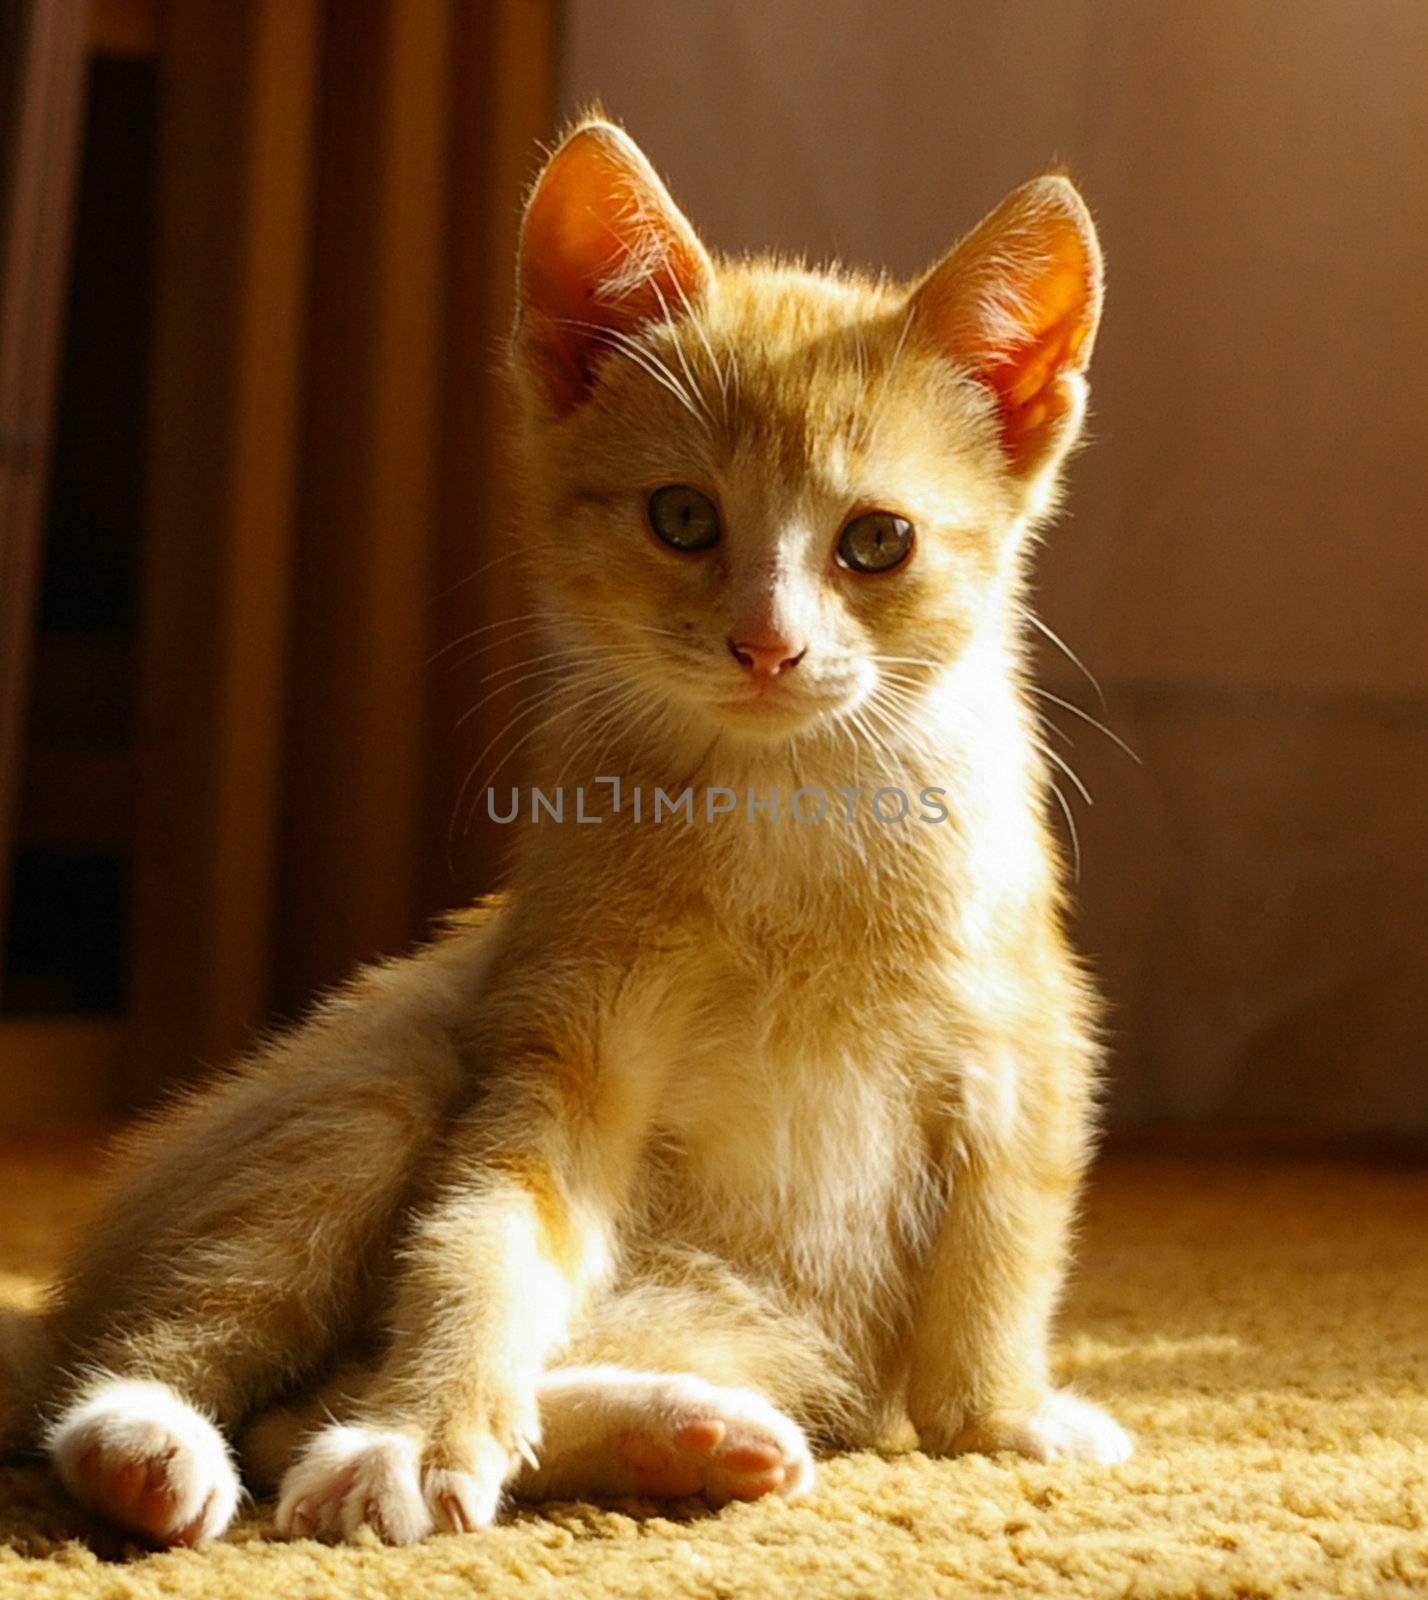 A close up of a yellow kitten.